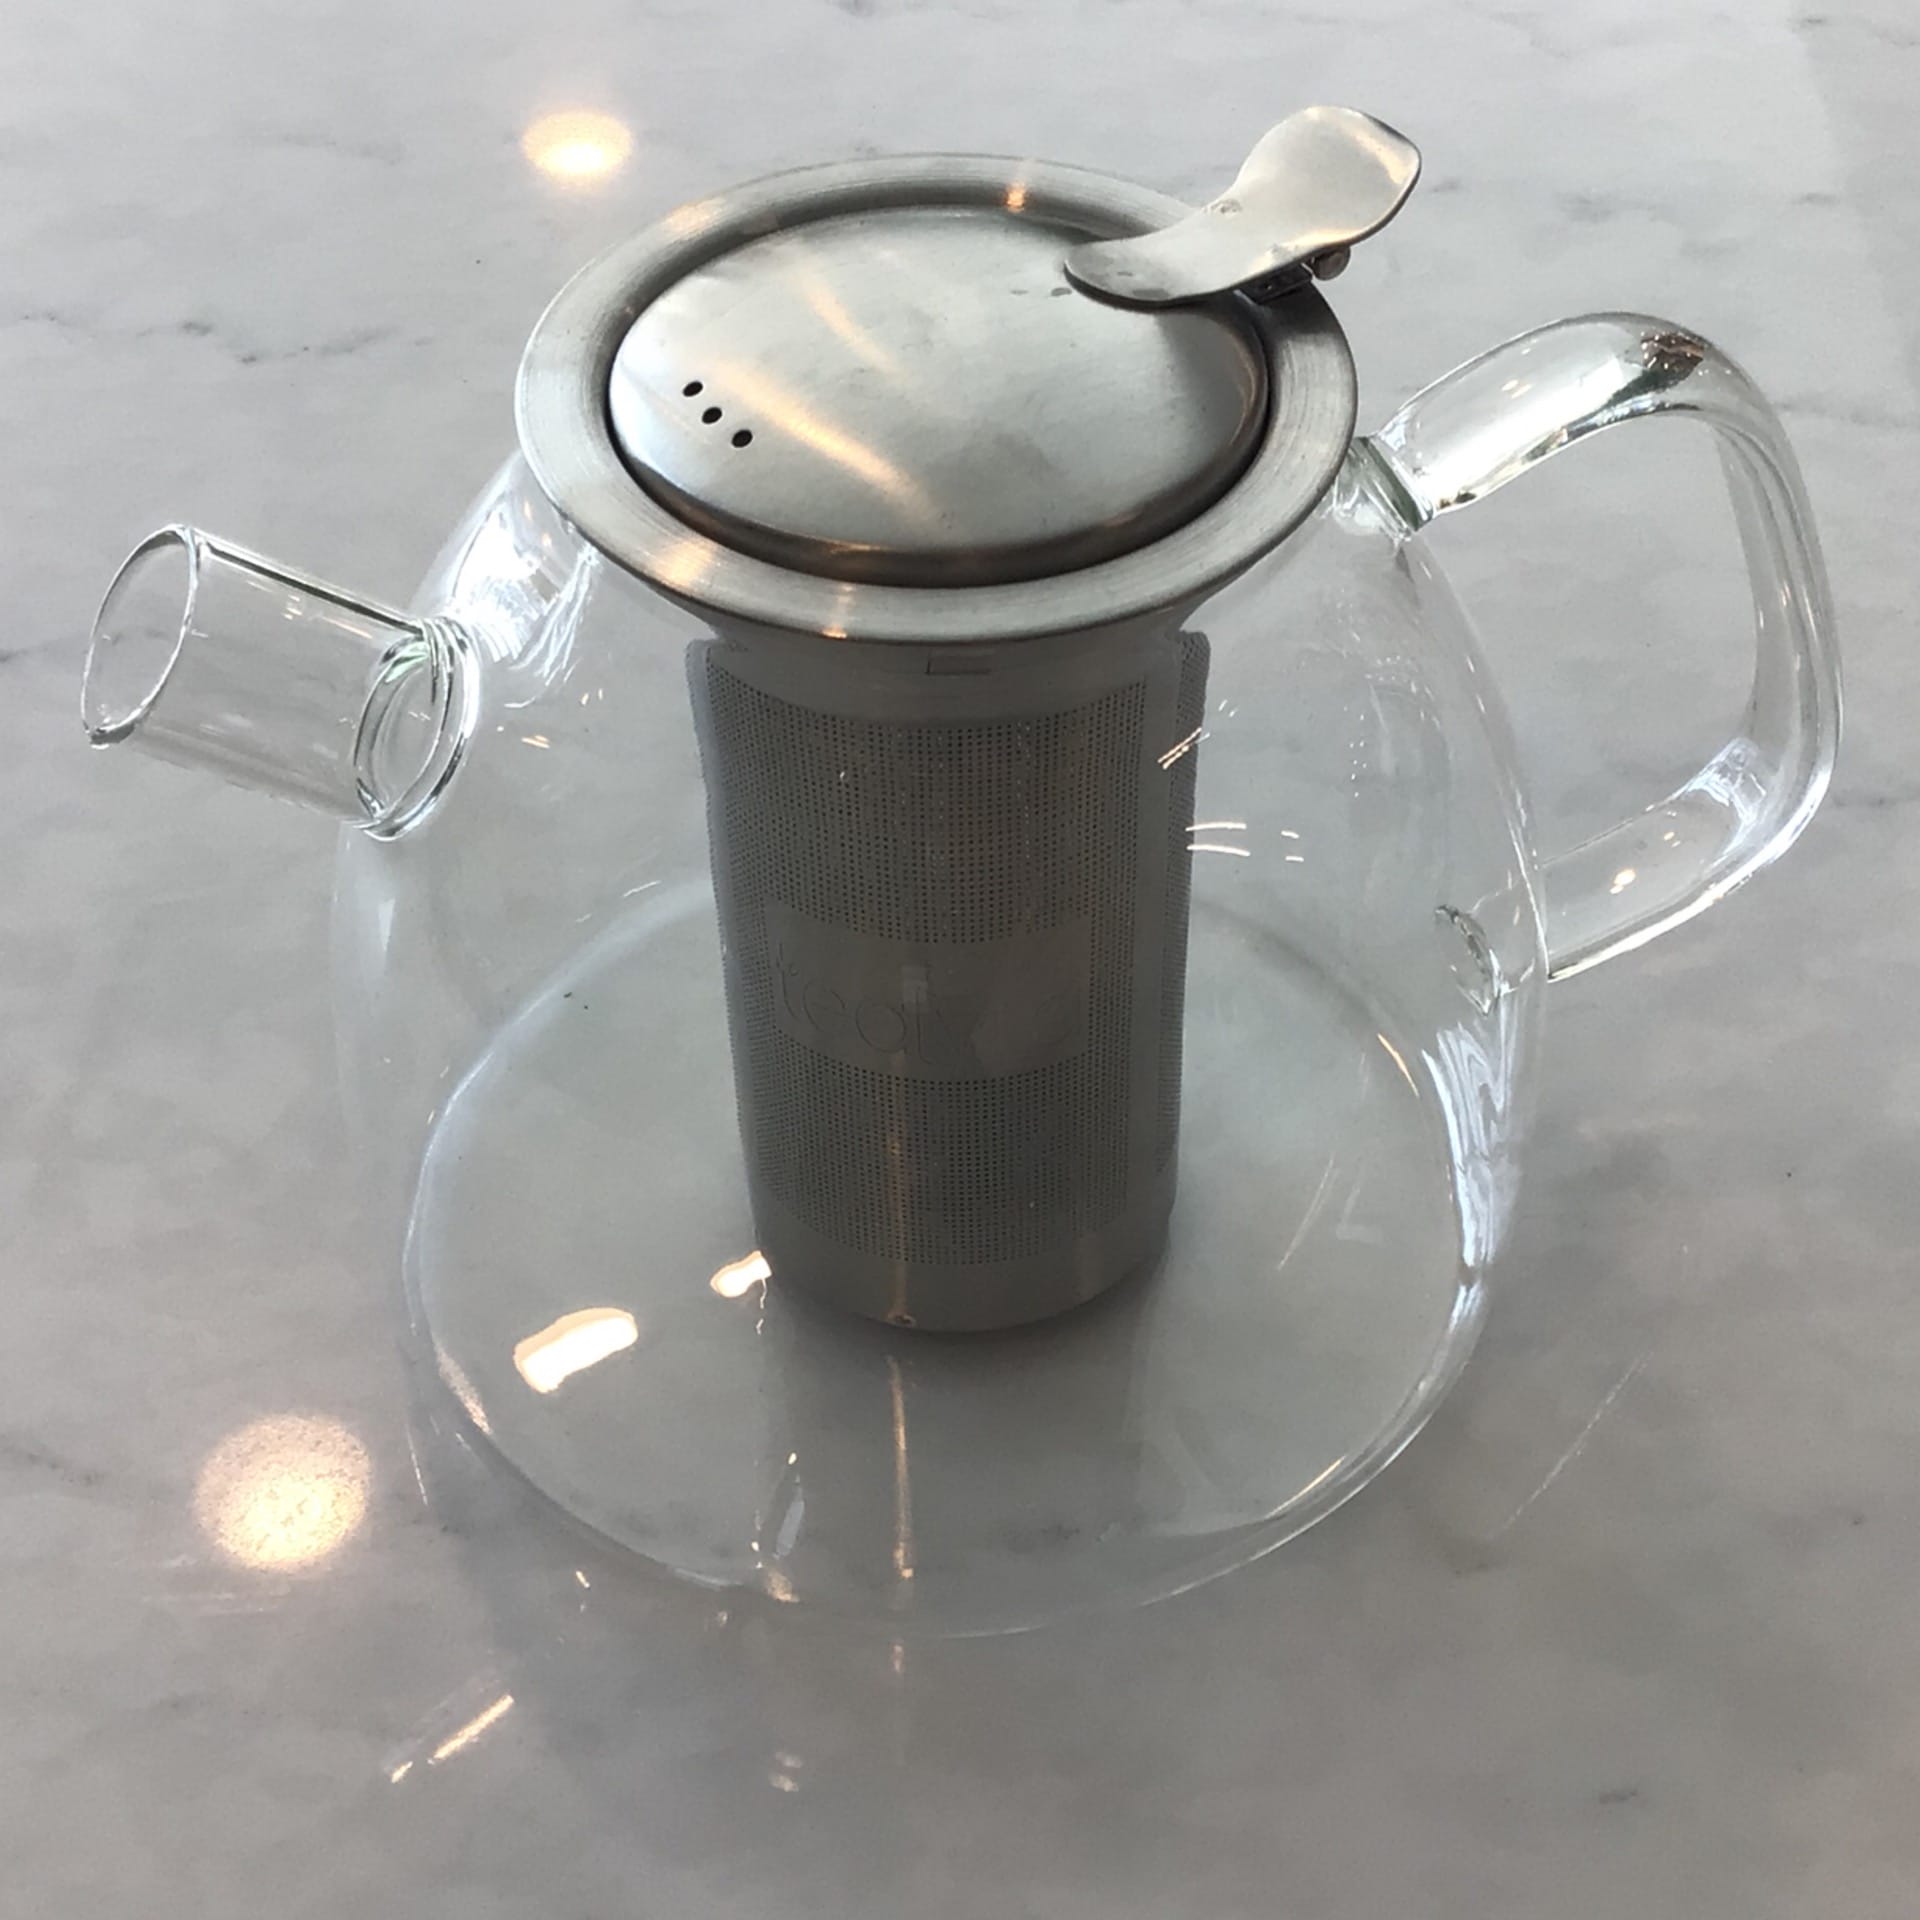 https://ex9gmccx2pn.exactdn.com/wp-content/uploads/2021/08/tealyra-lyra-glass-tea-pot-w-stainless-steel-infuser-37-oz.jpeg?strip=all&lossy=1&ssl=1